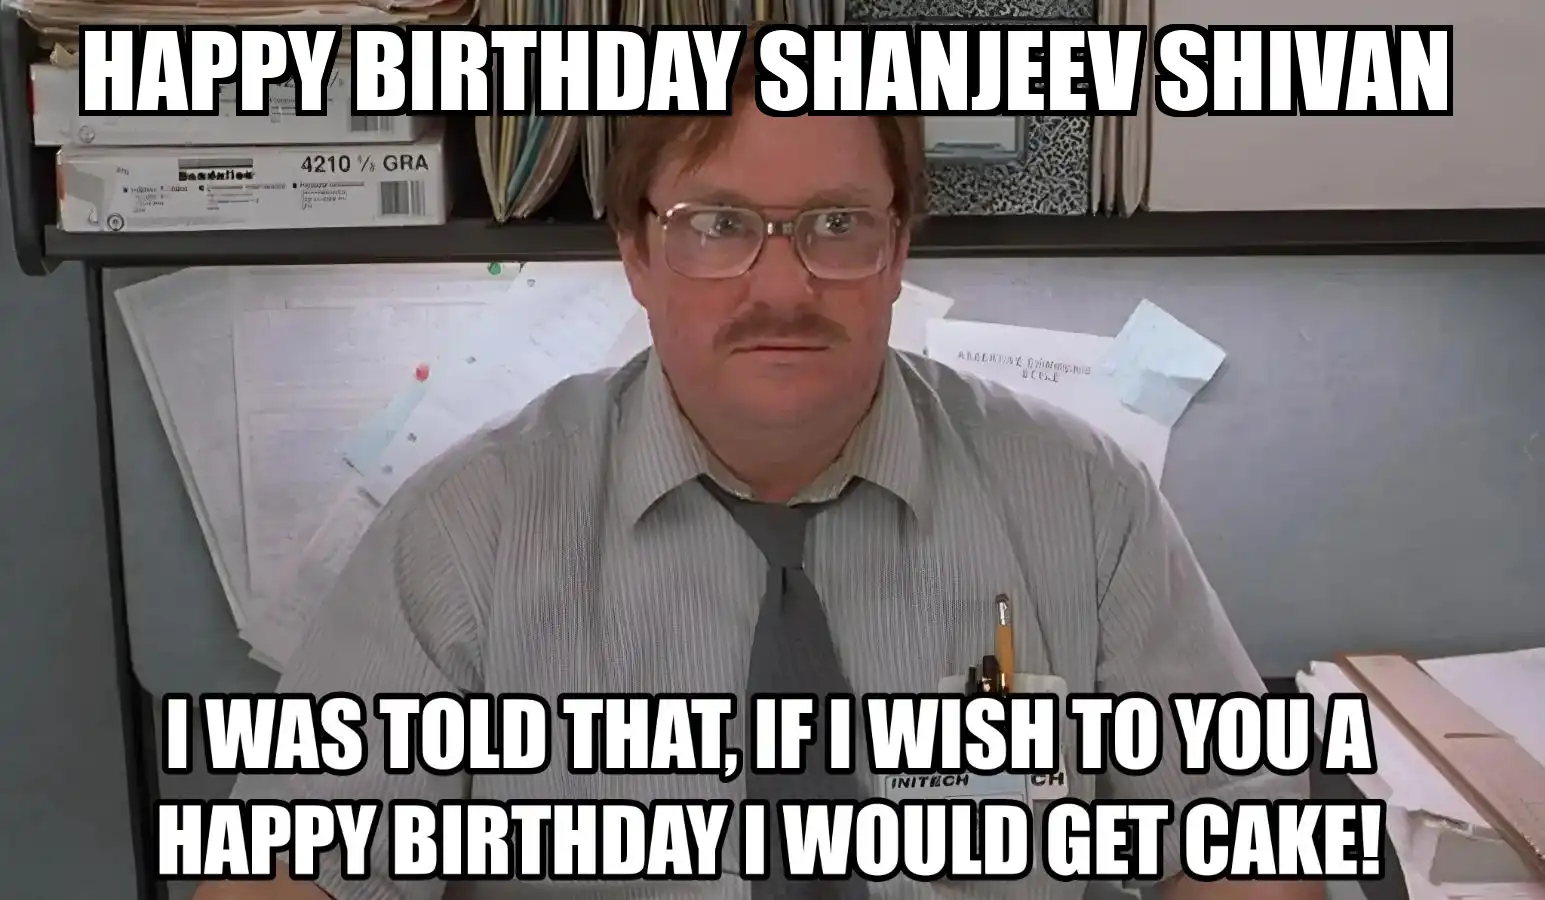 Happy Birthday Shanjeev shivan I Would Get A Cake Meme